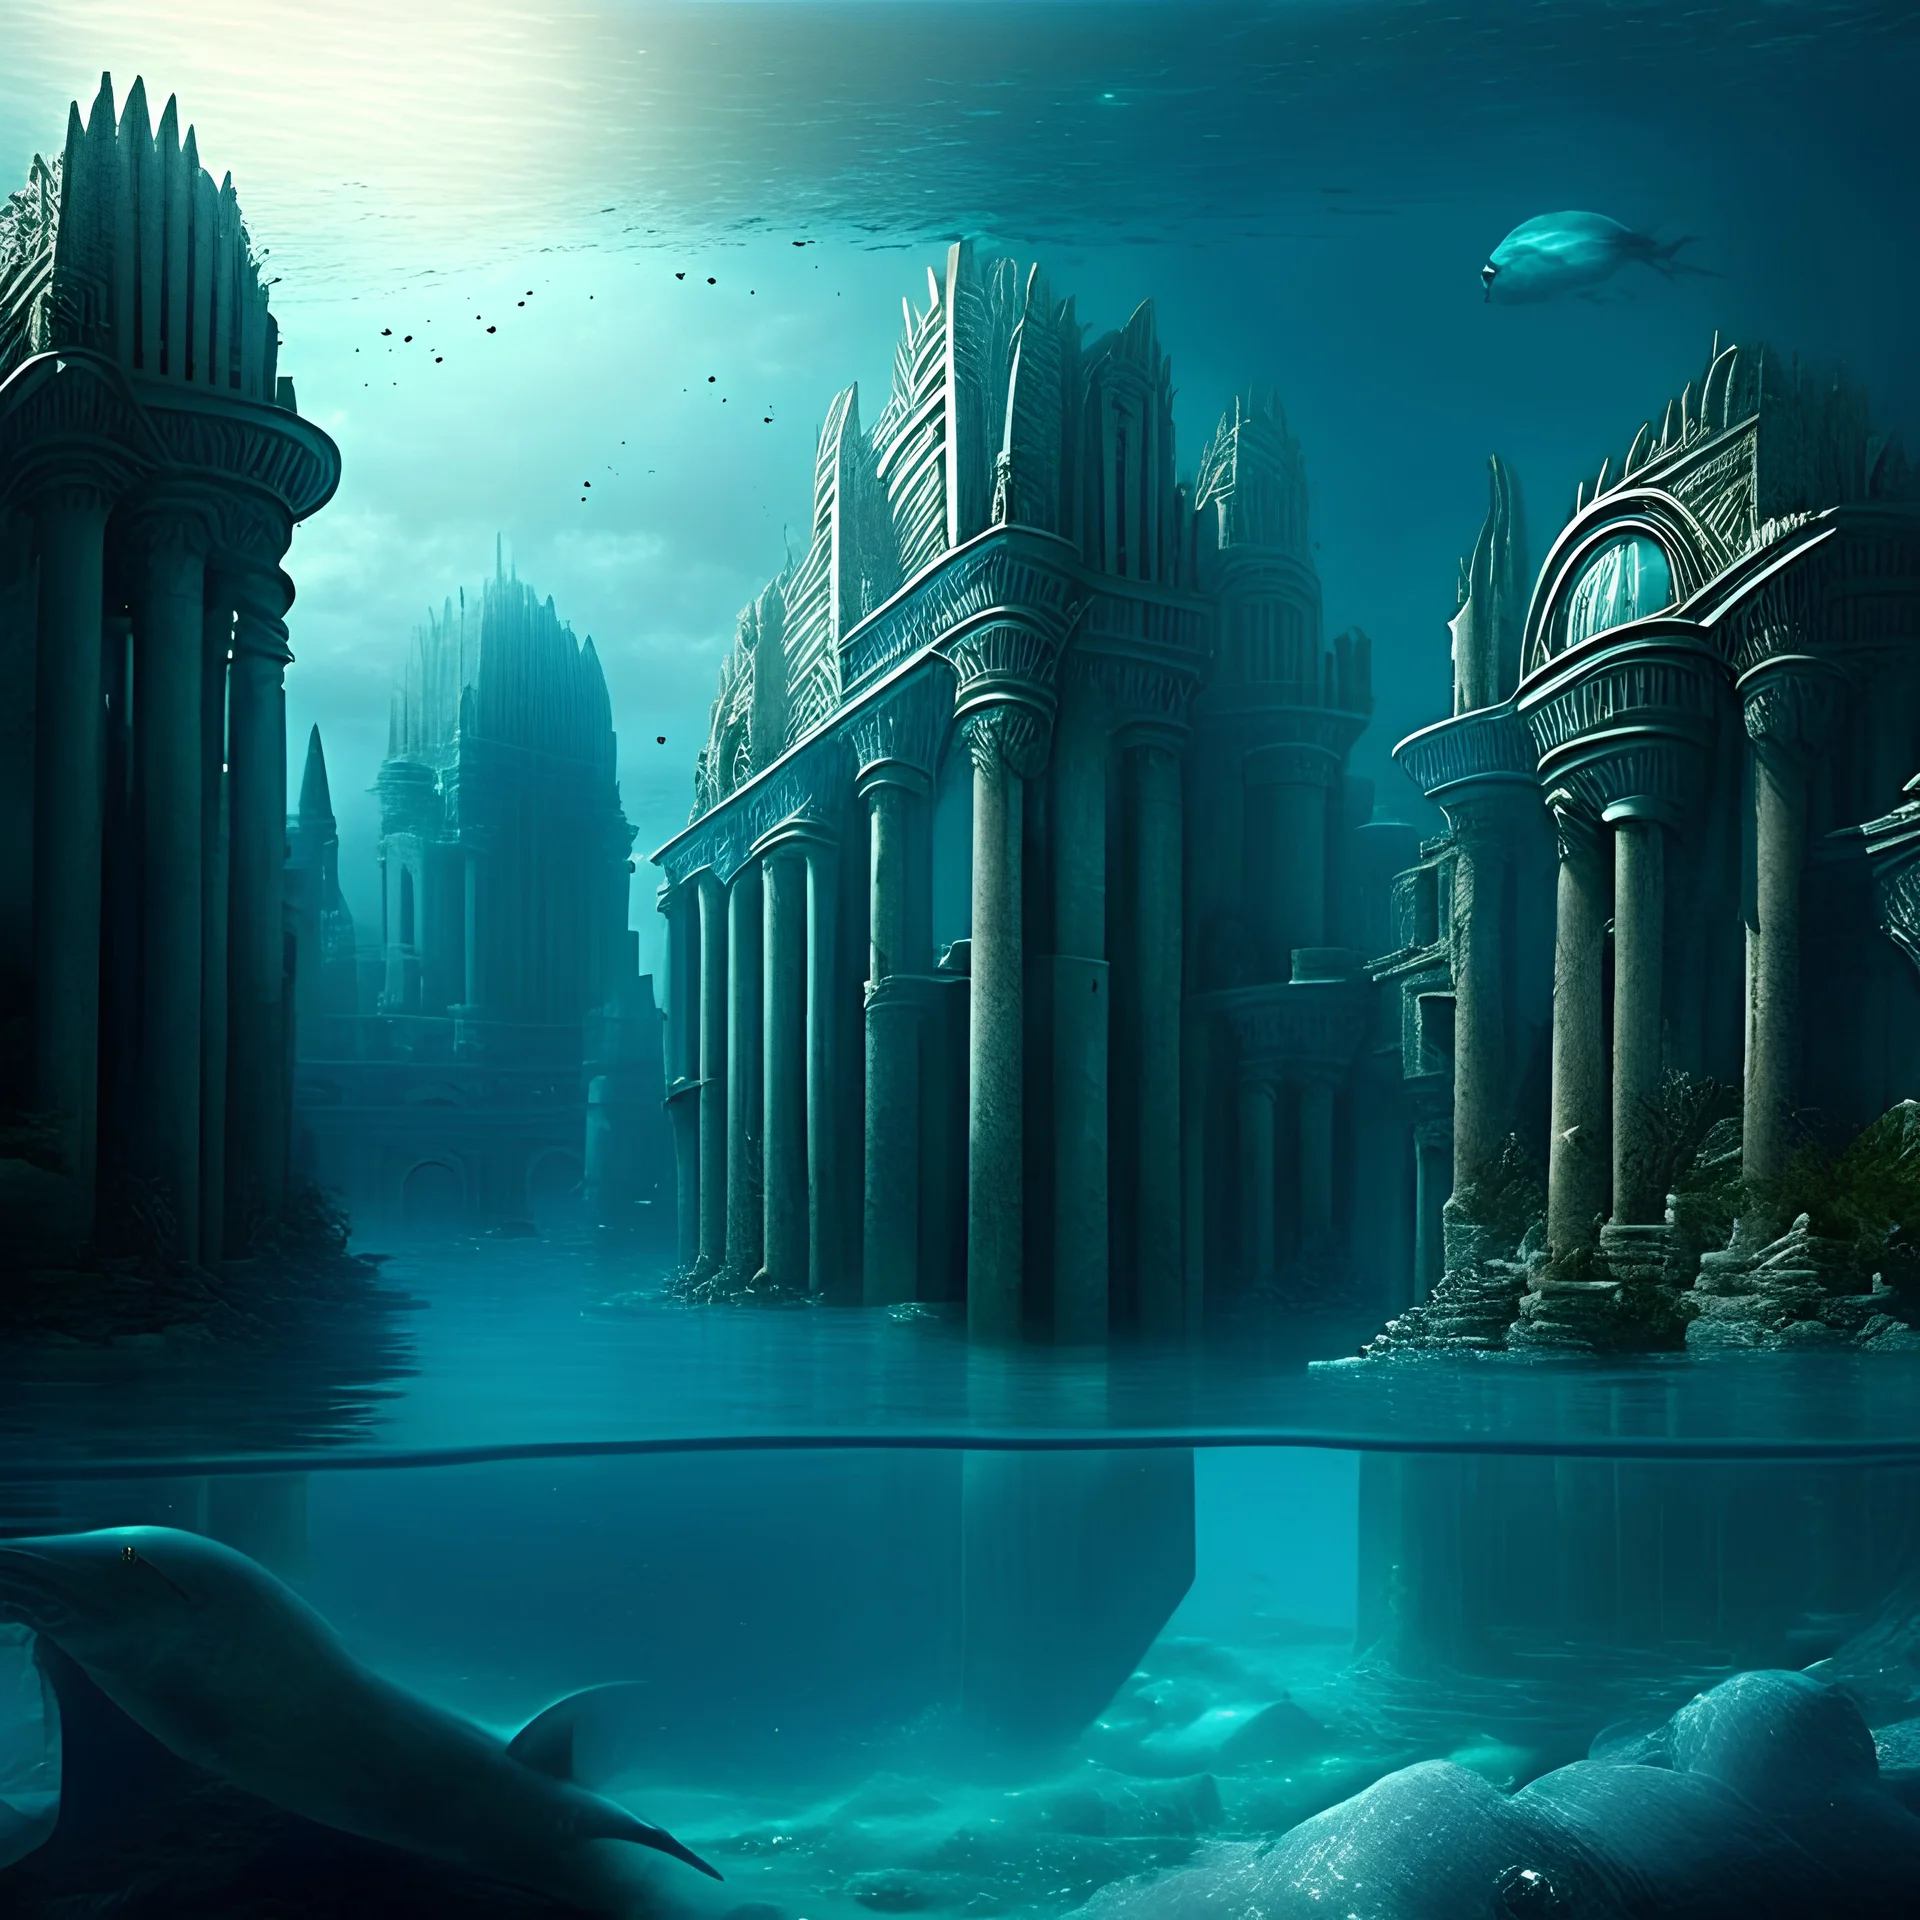 The city of Atlantis